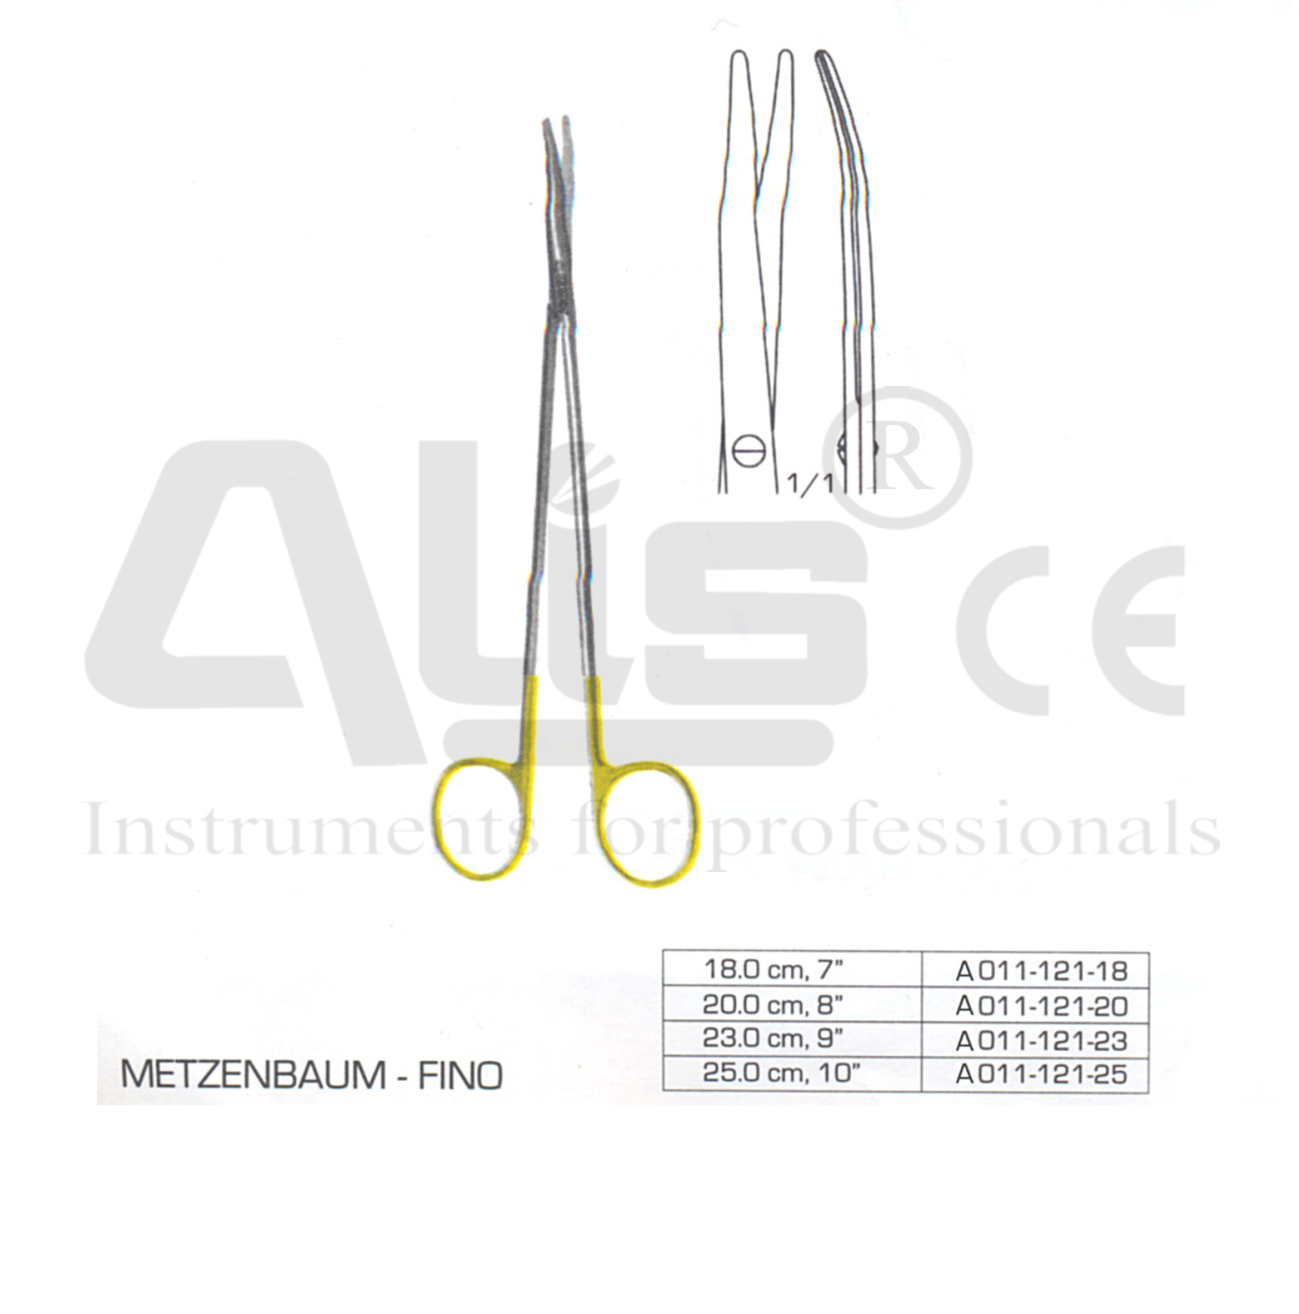 Metzenbaum fino surgical scissors with tungsten carbide edges